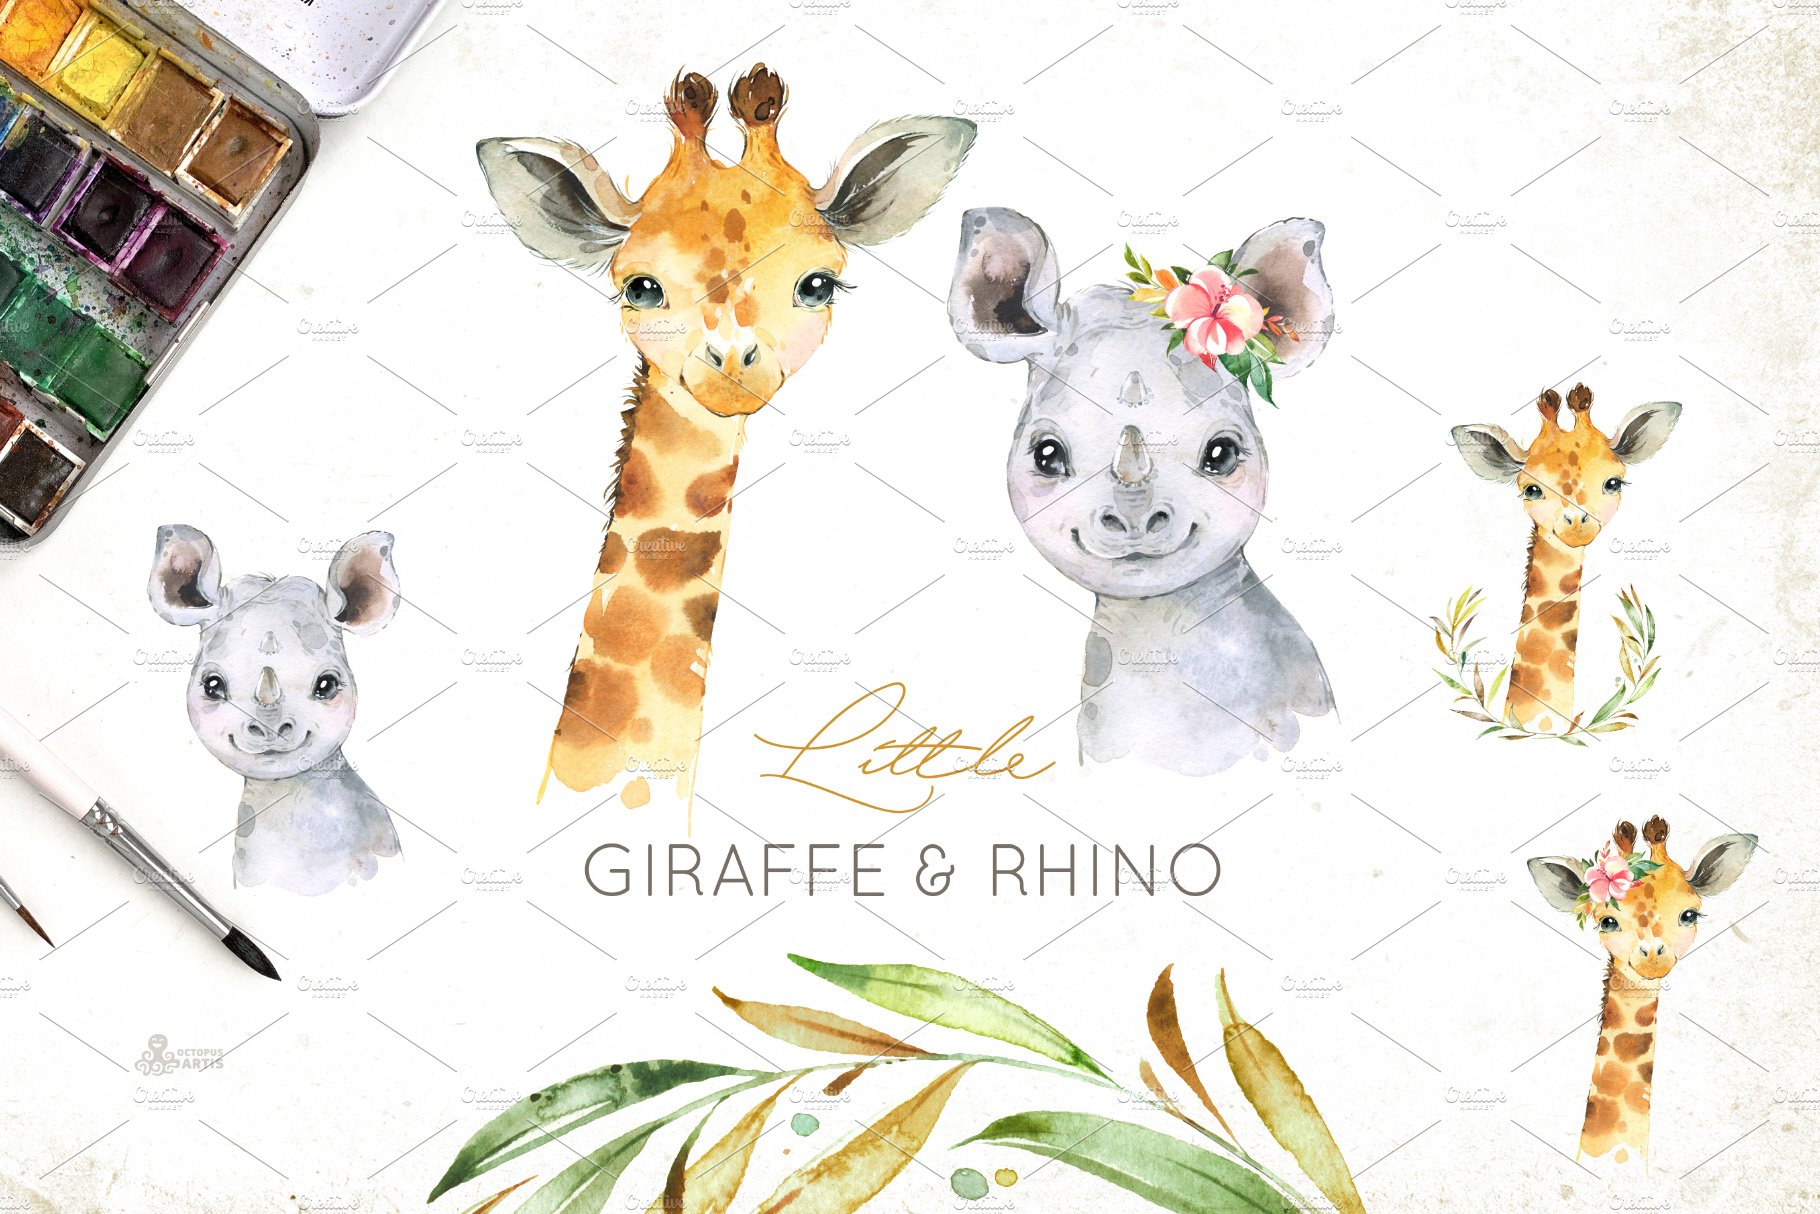 So cute giraffe and rhino.